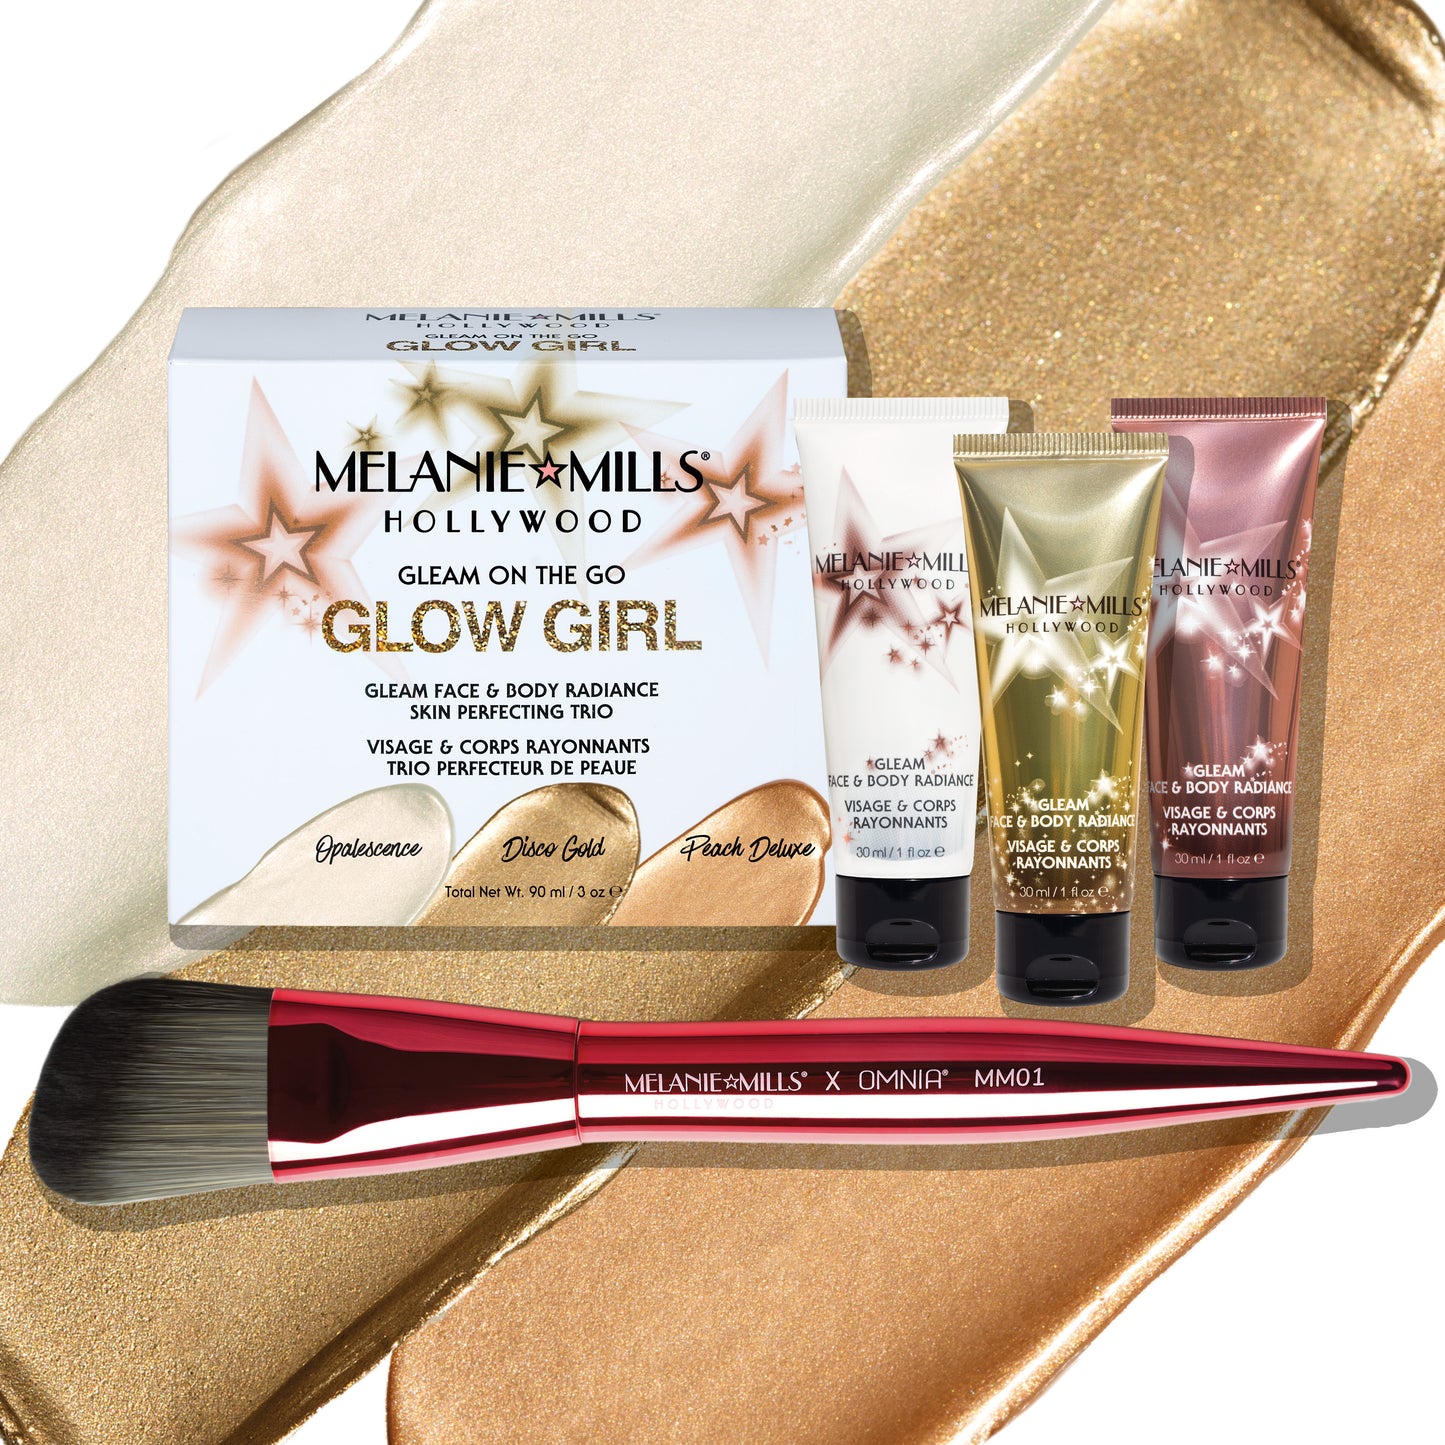 Melanie Mills Hollywood Glow Girl Gleam on the Go Body Radiance Kit